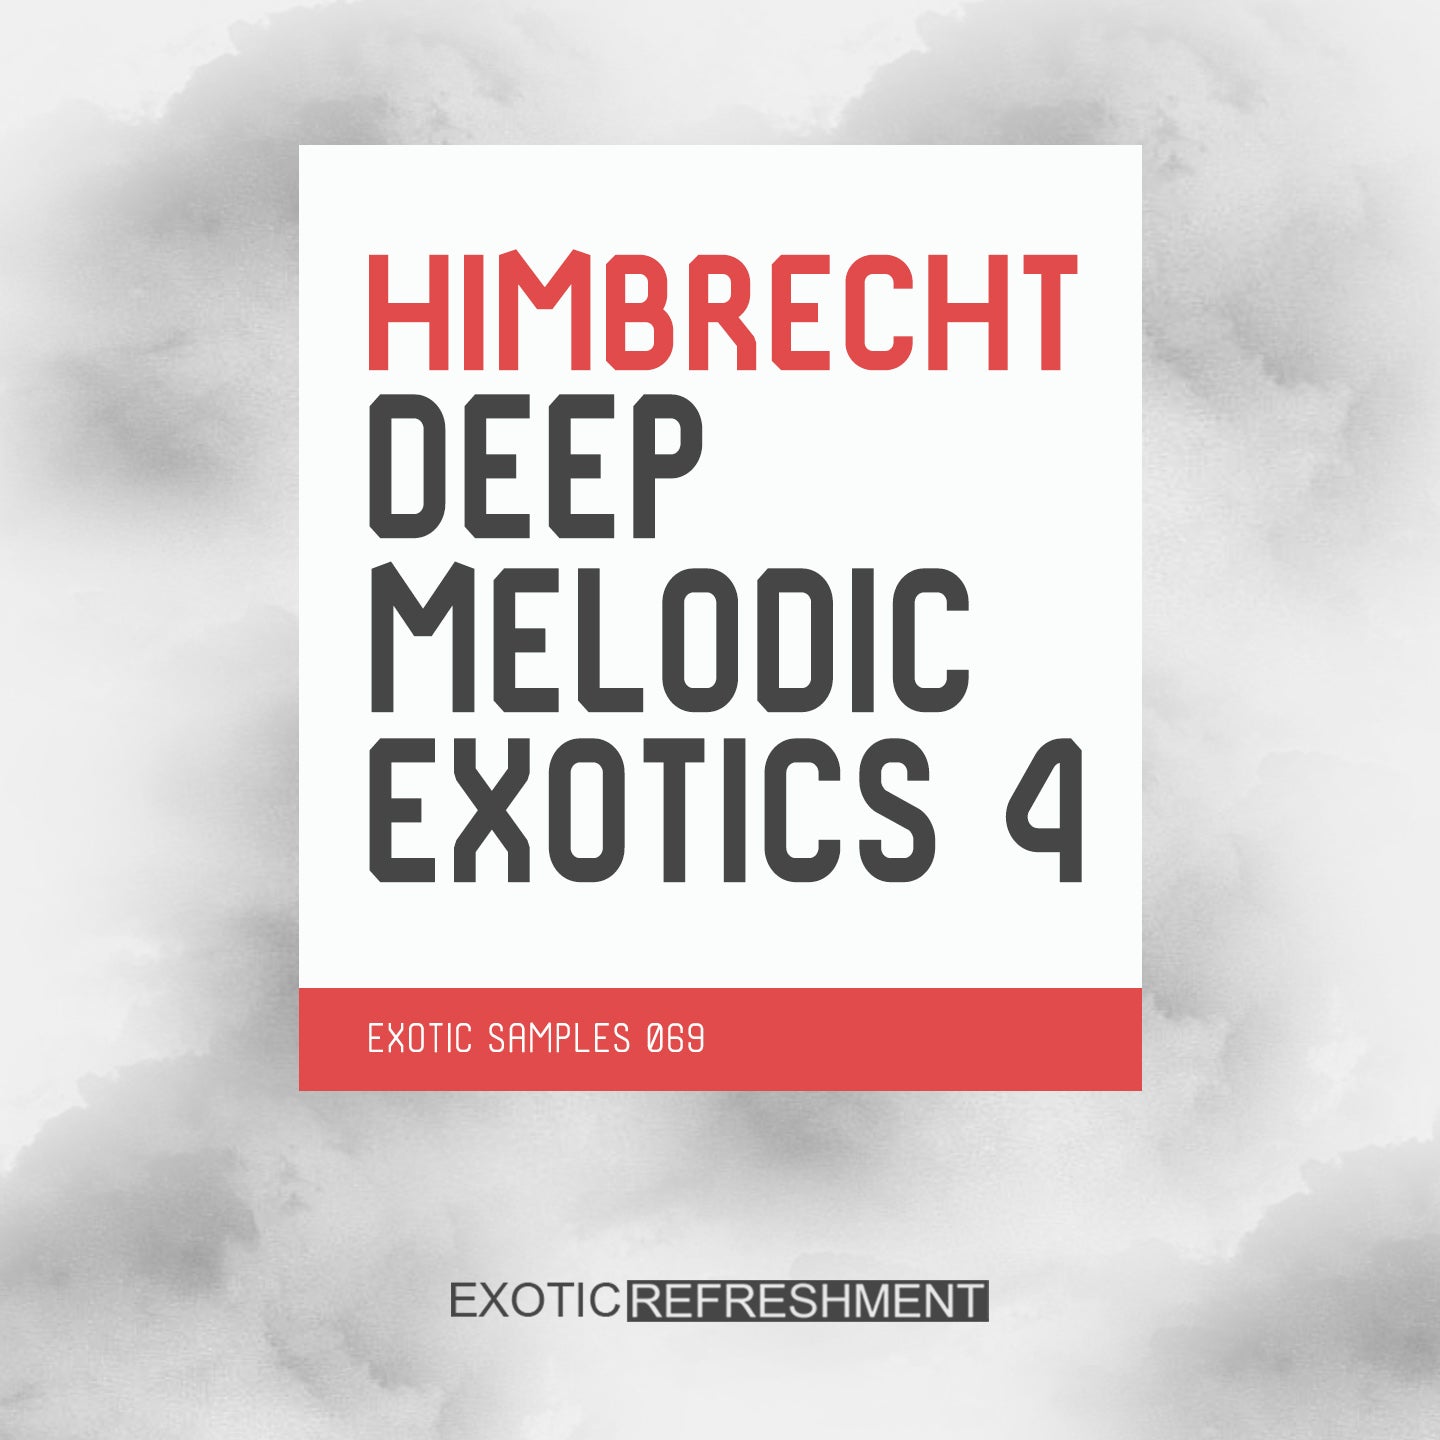 Himbrecht Deep Melodic Exotics 4 - Sample Pack